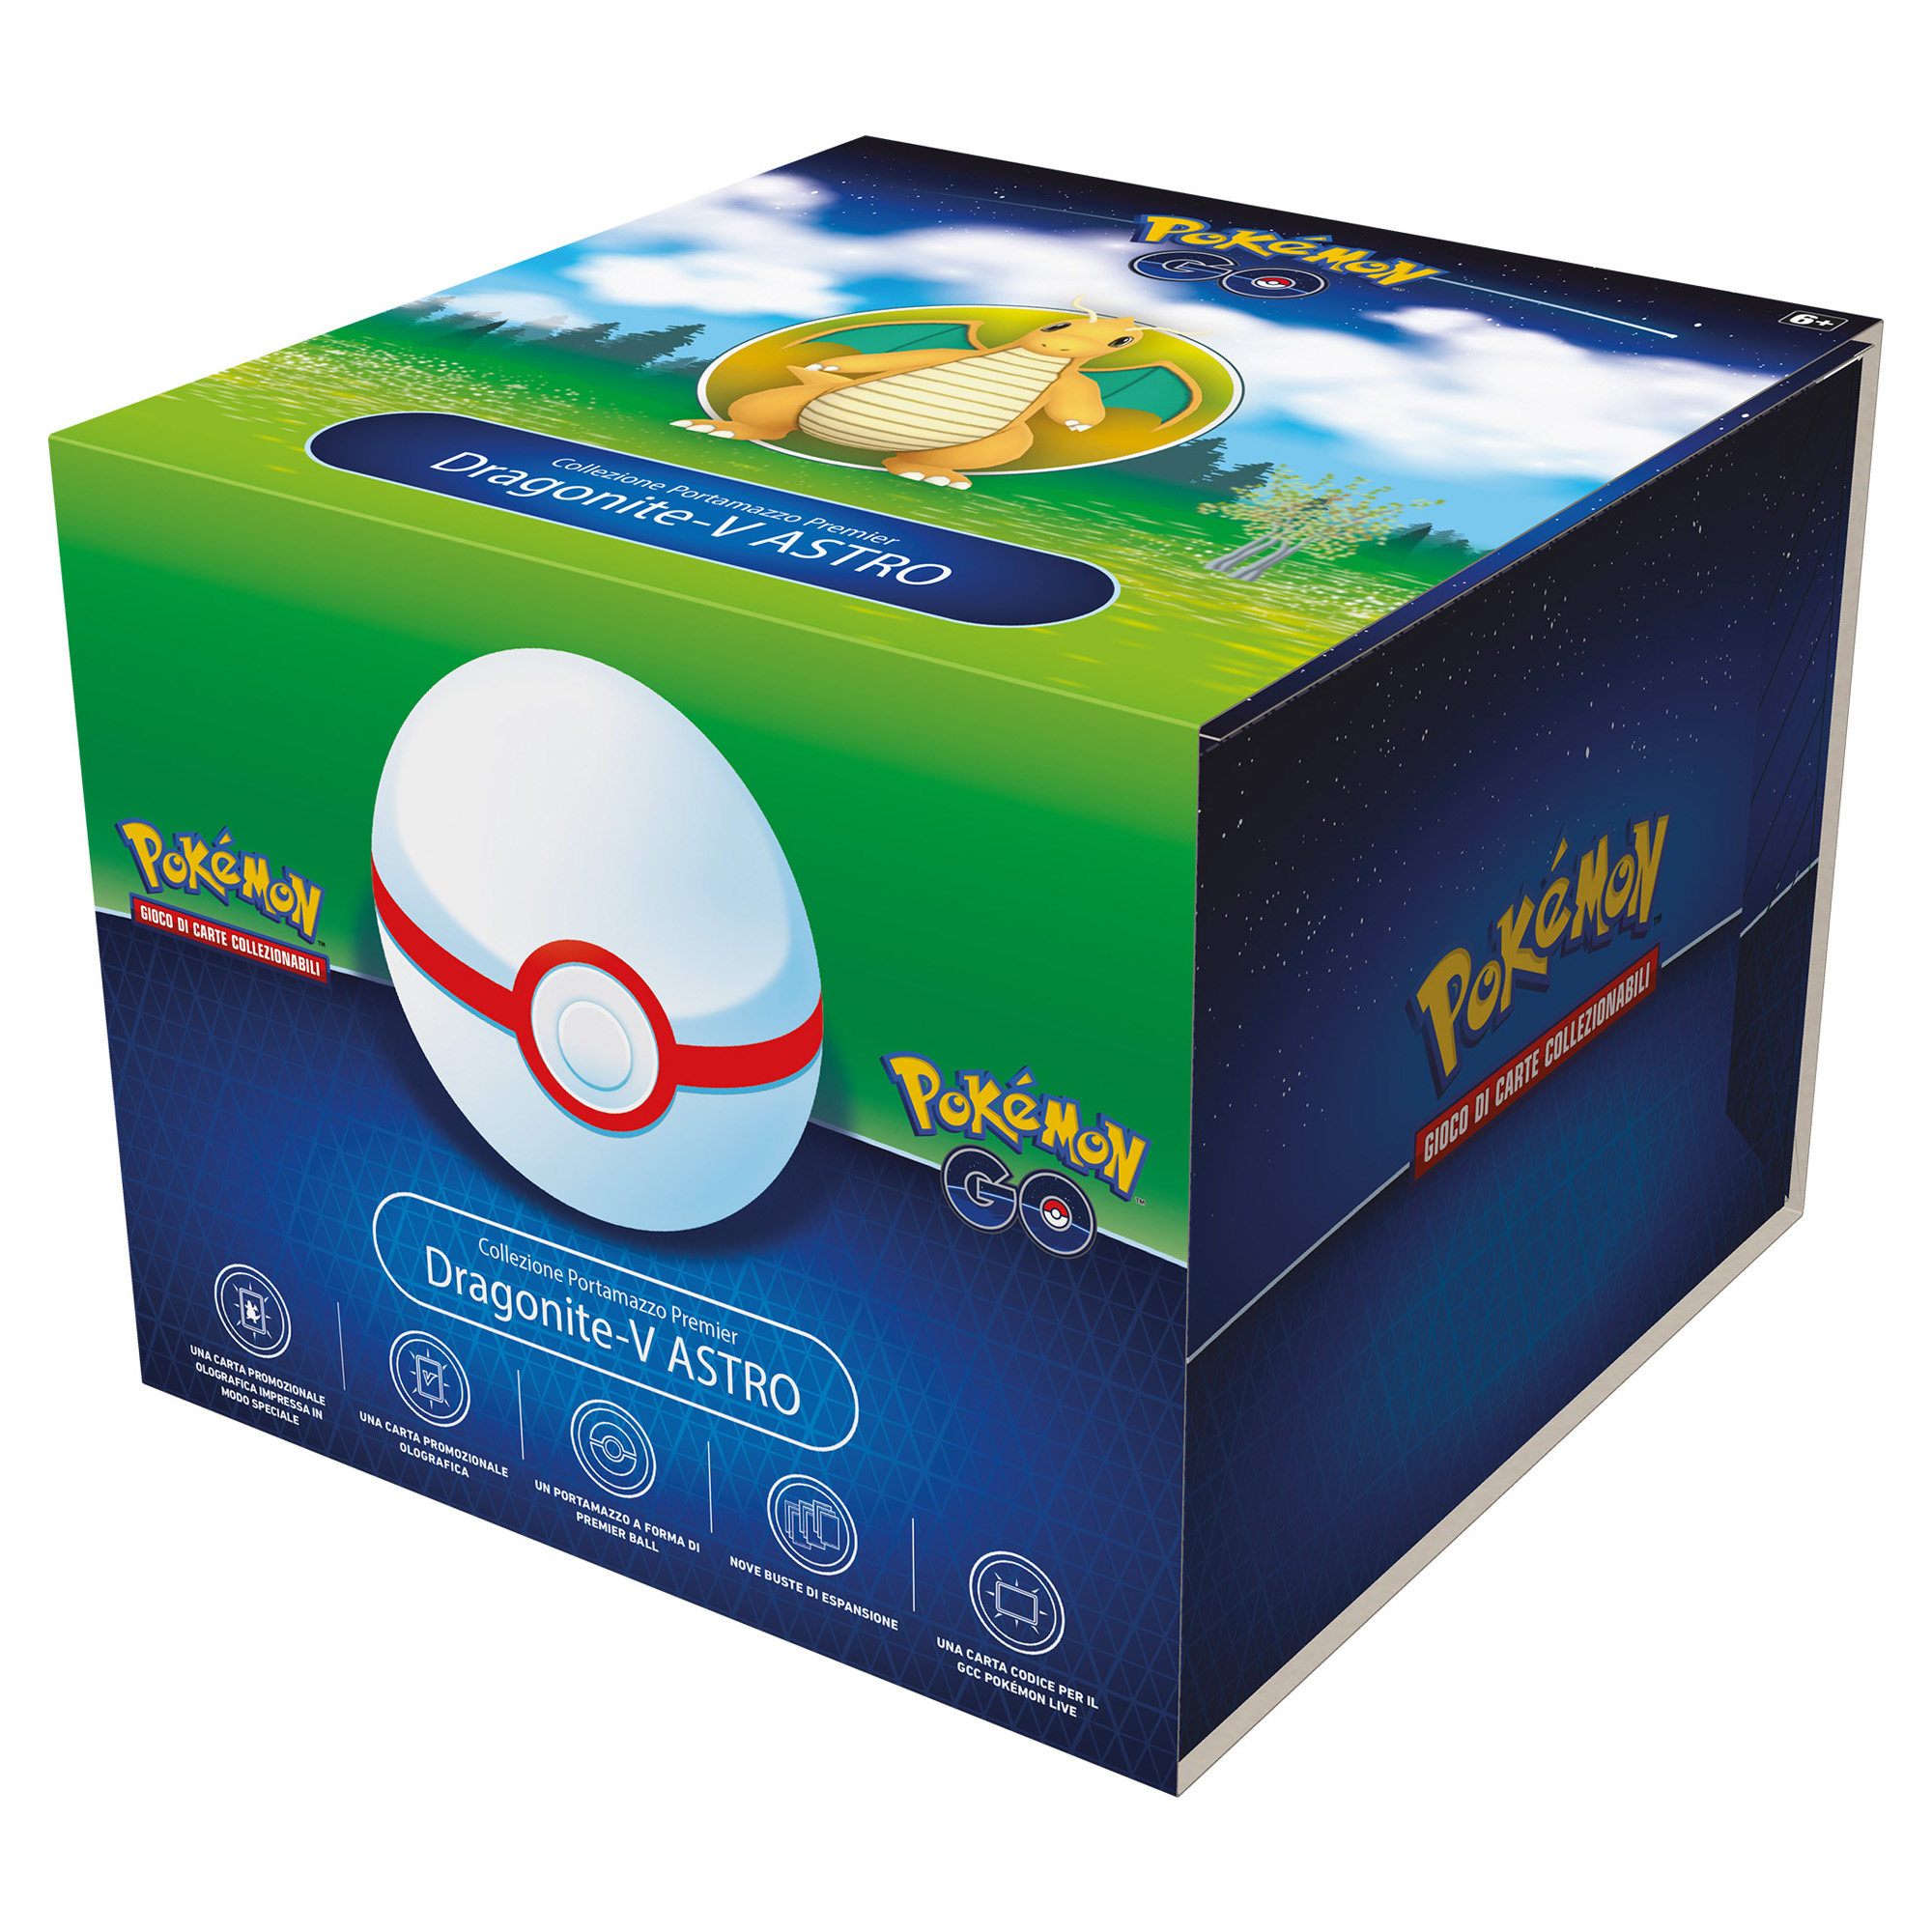 Pokemon 10.5 Pokemon GO Collezione Portamazzo Premier Dragonite- V Astro - Pokémon